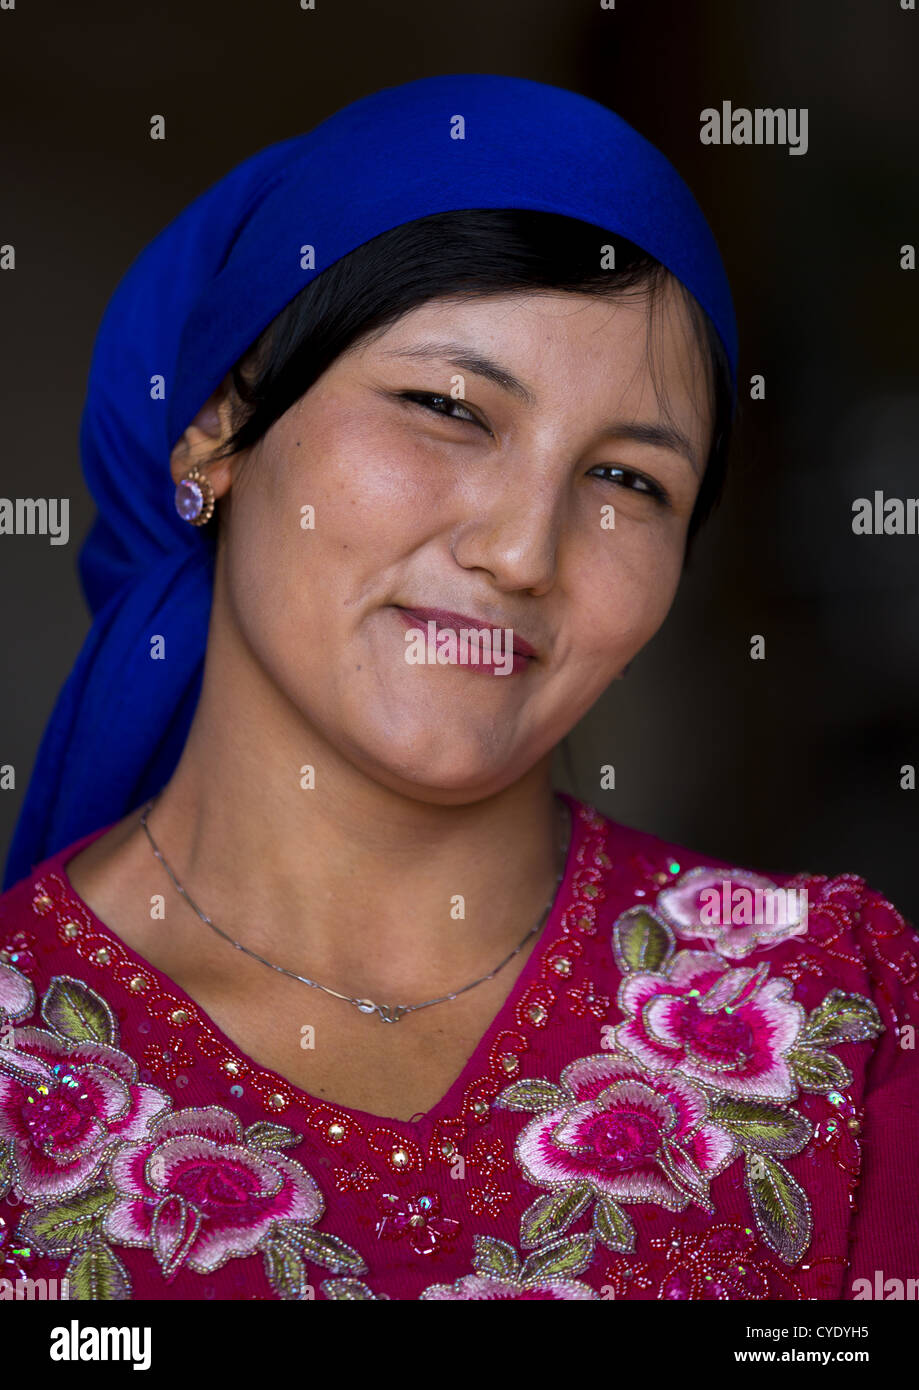 jeune-femme-ouigoure-serik-buya-yarkand-marche-la-region-autonome-ouighoure-du-xinjiang-chine-cydyh5.jpg